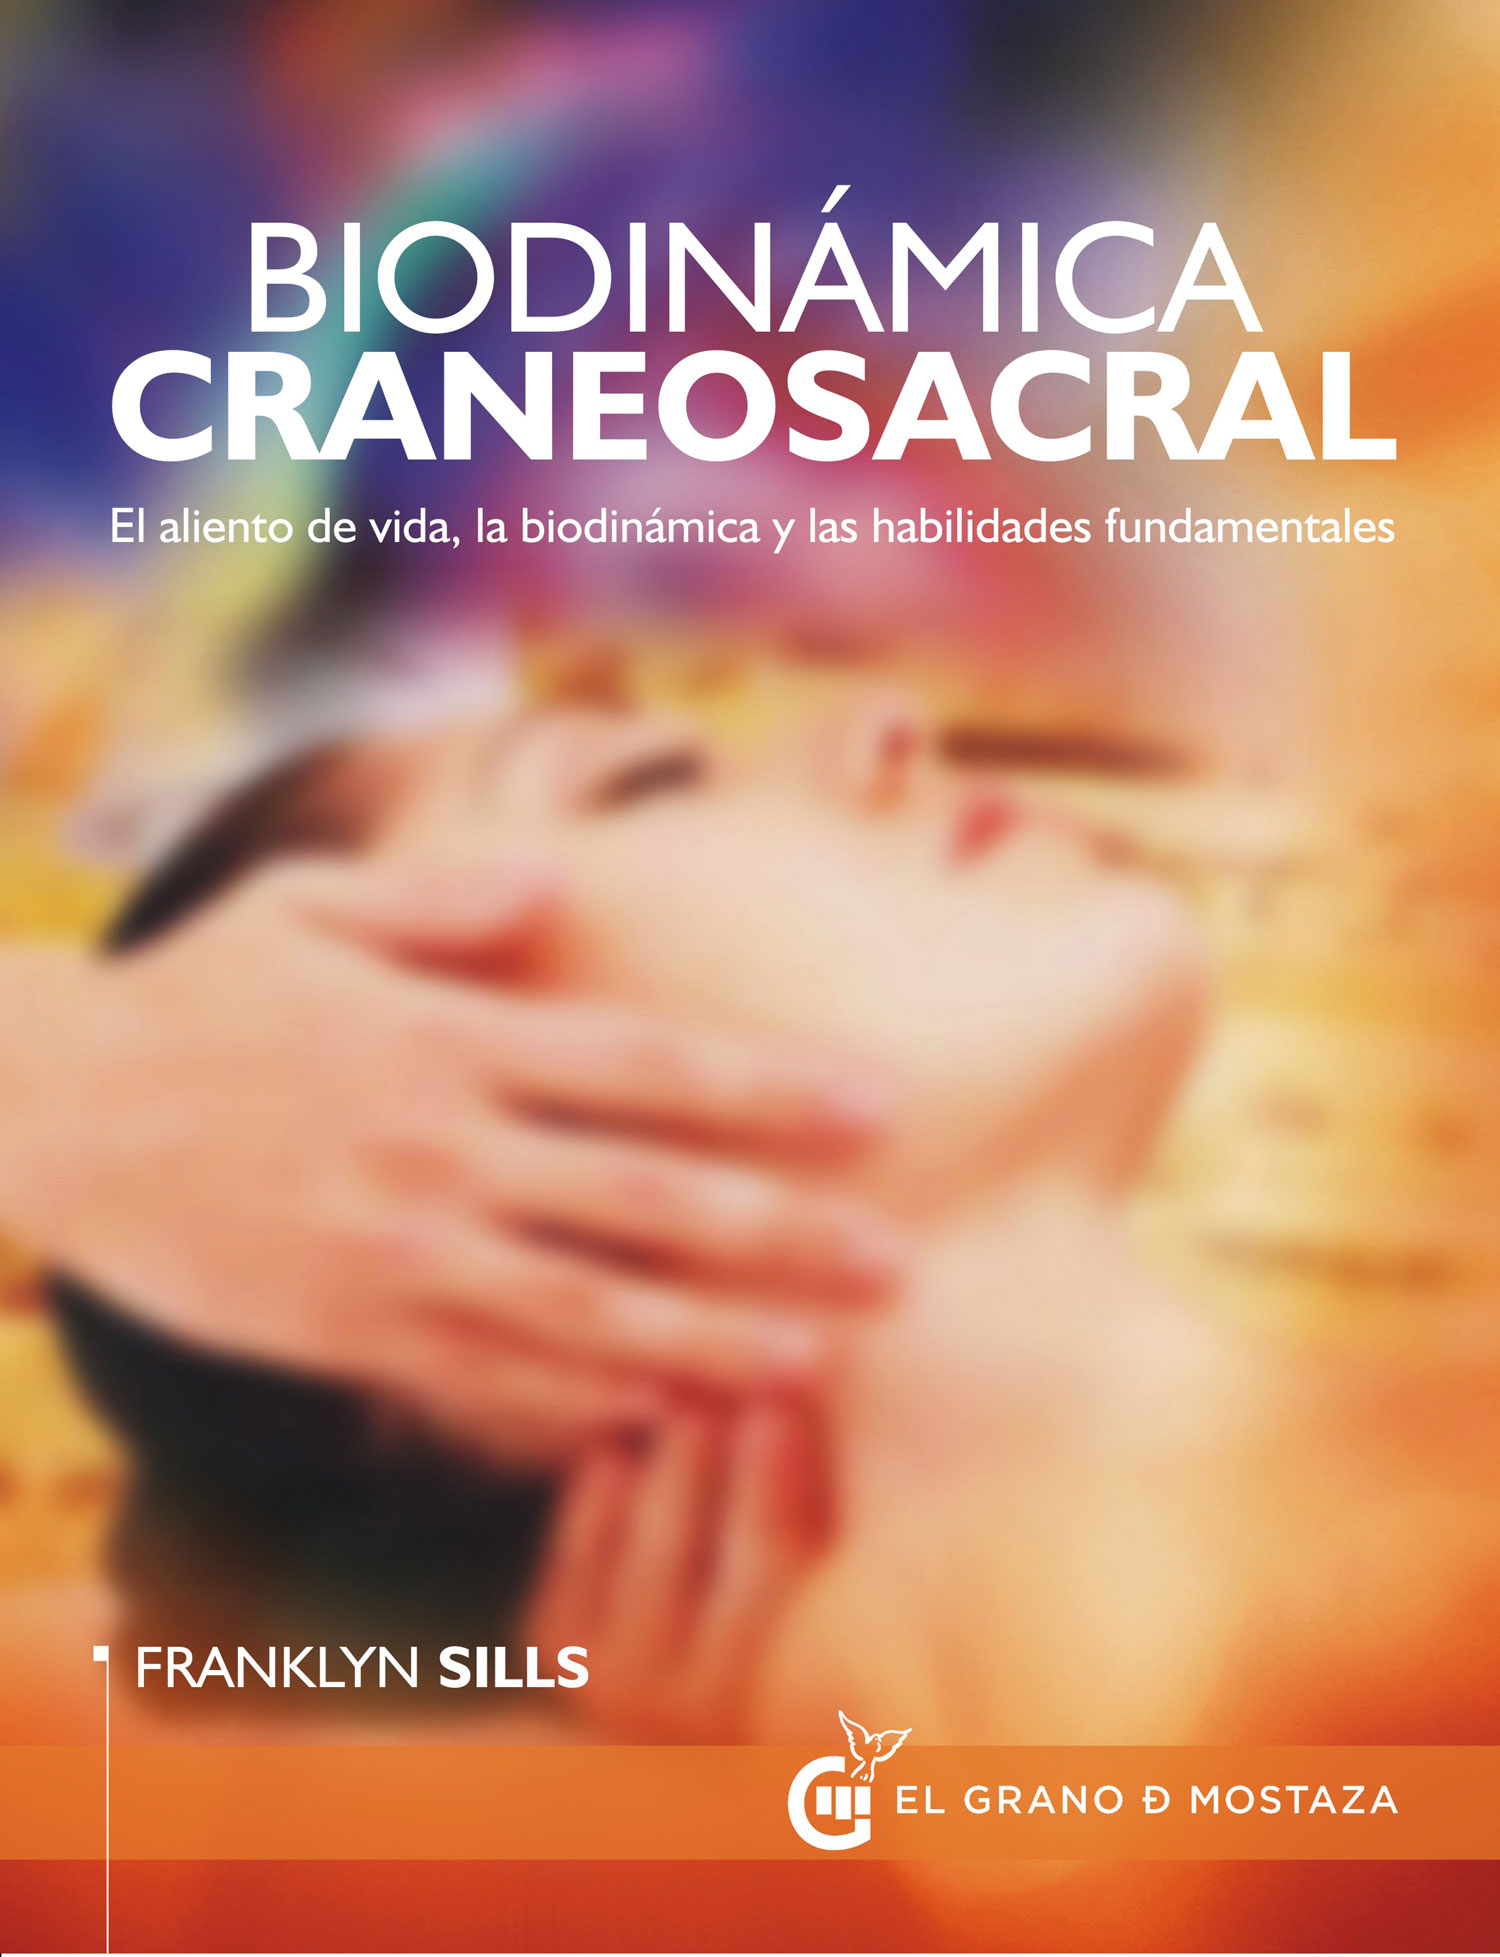 Biodinámica craneosacral